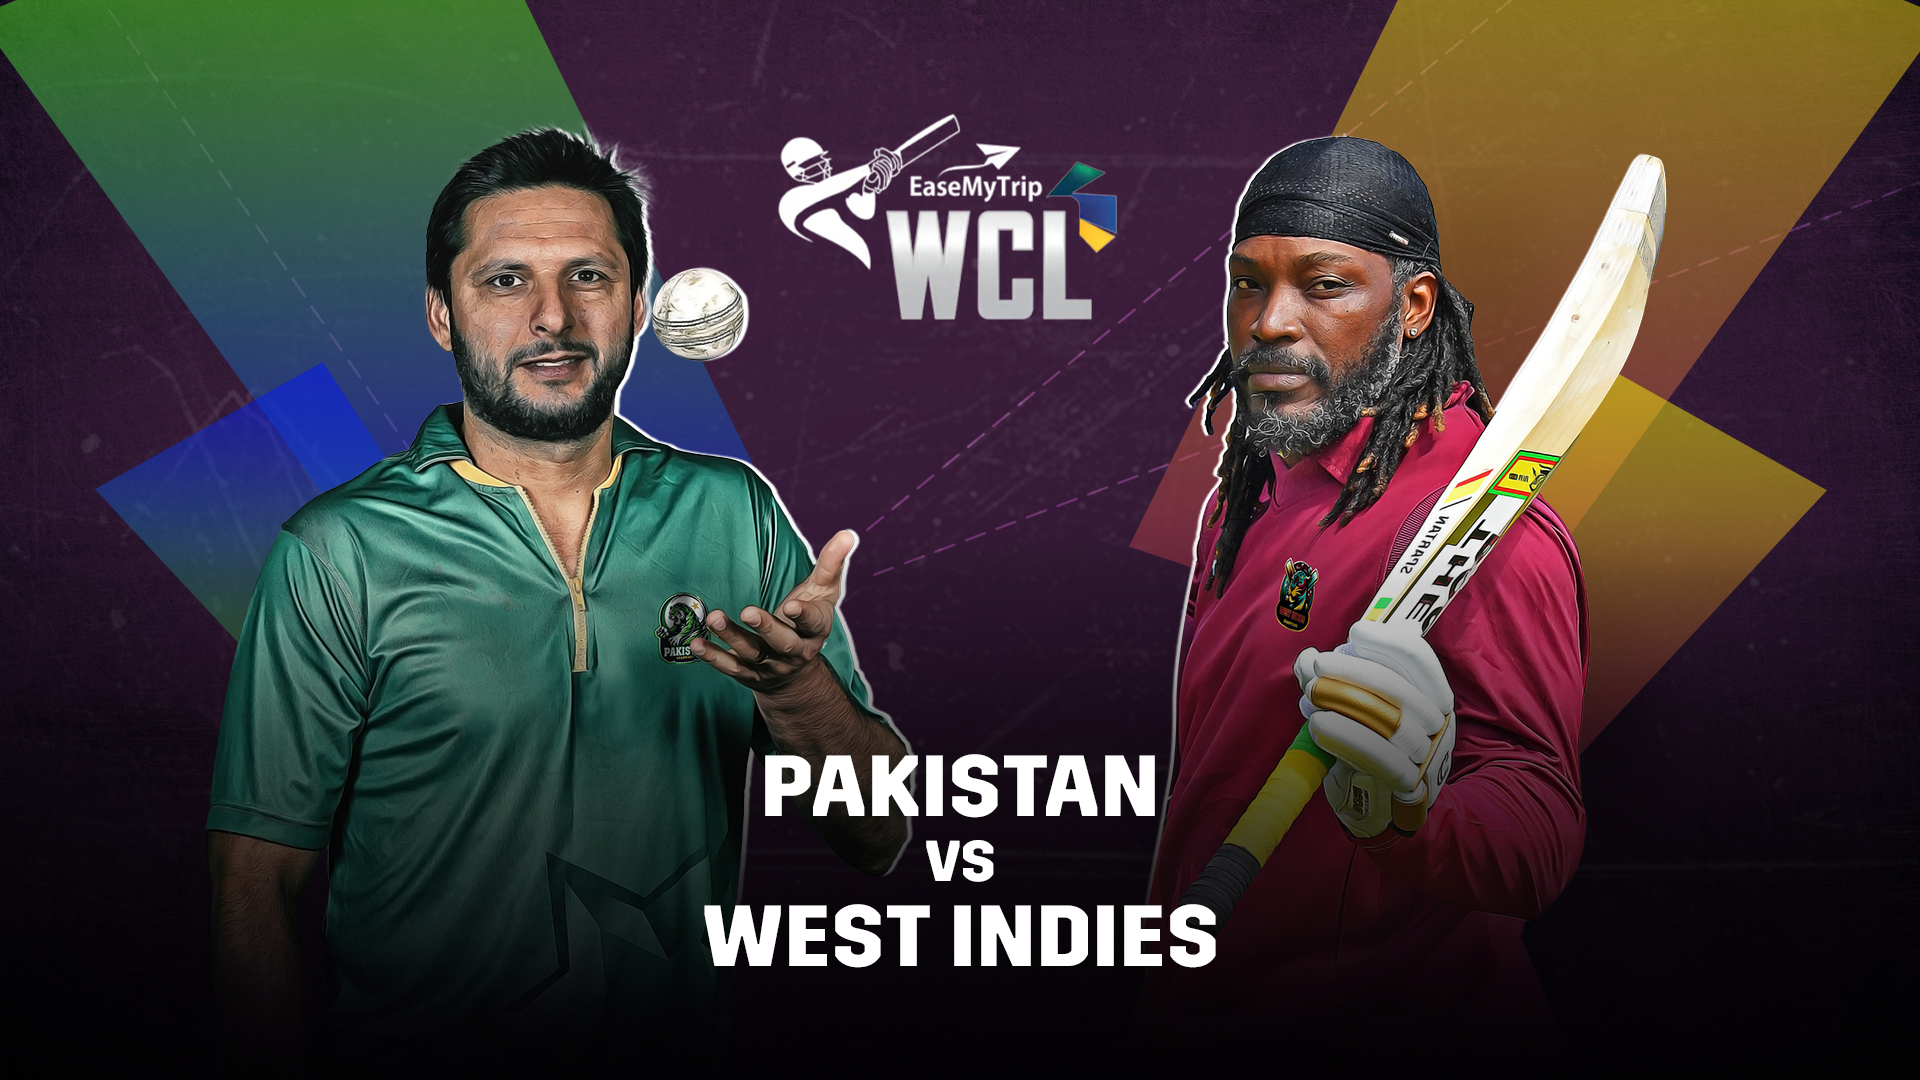 Pakistan Champions VS West Indies Champions